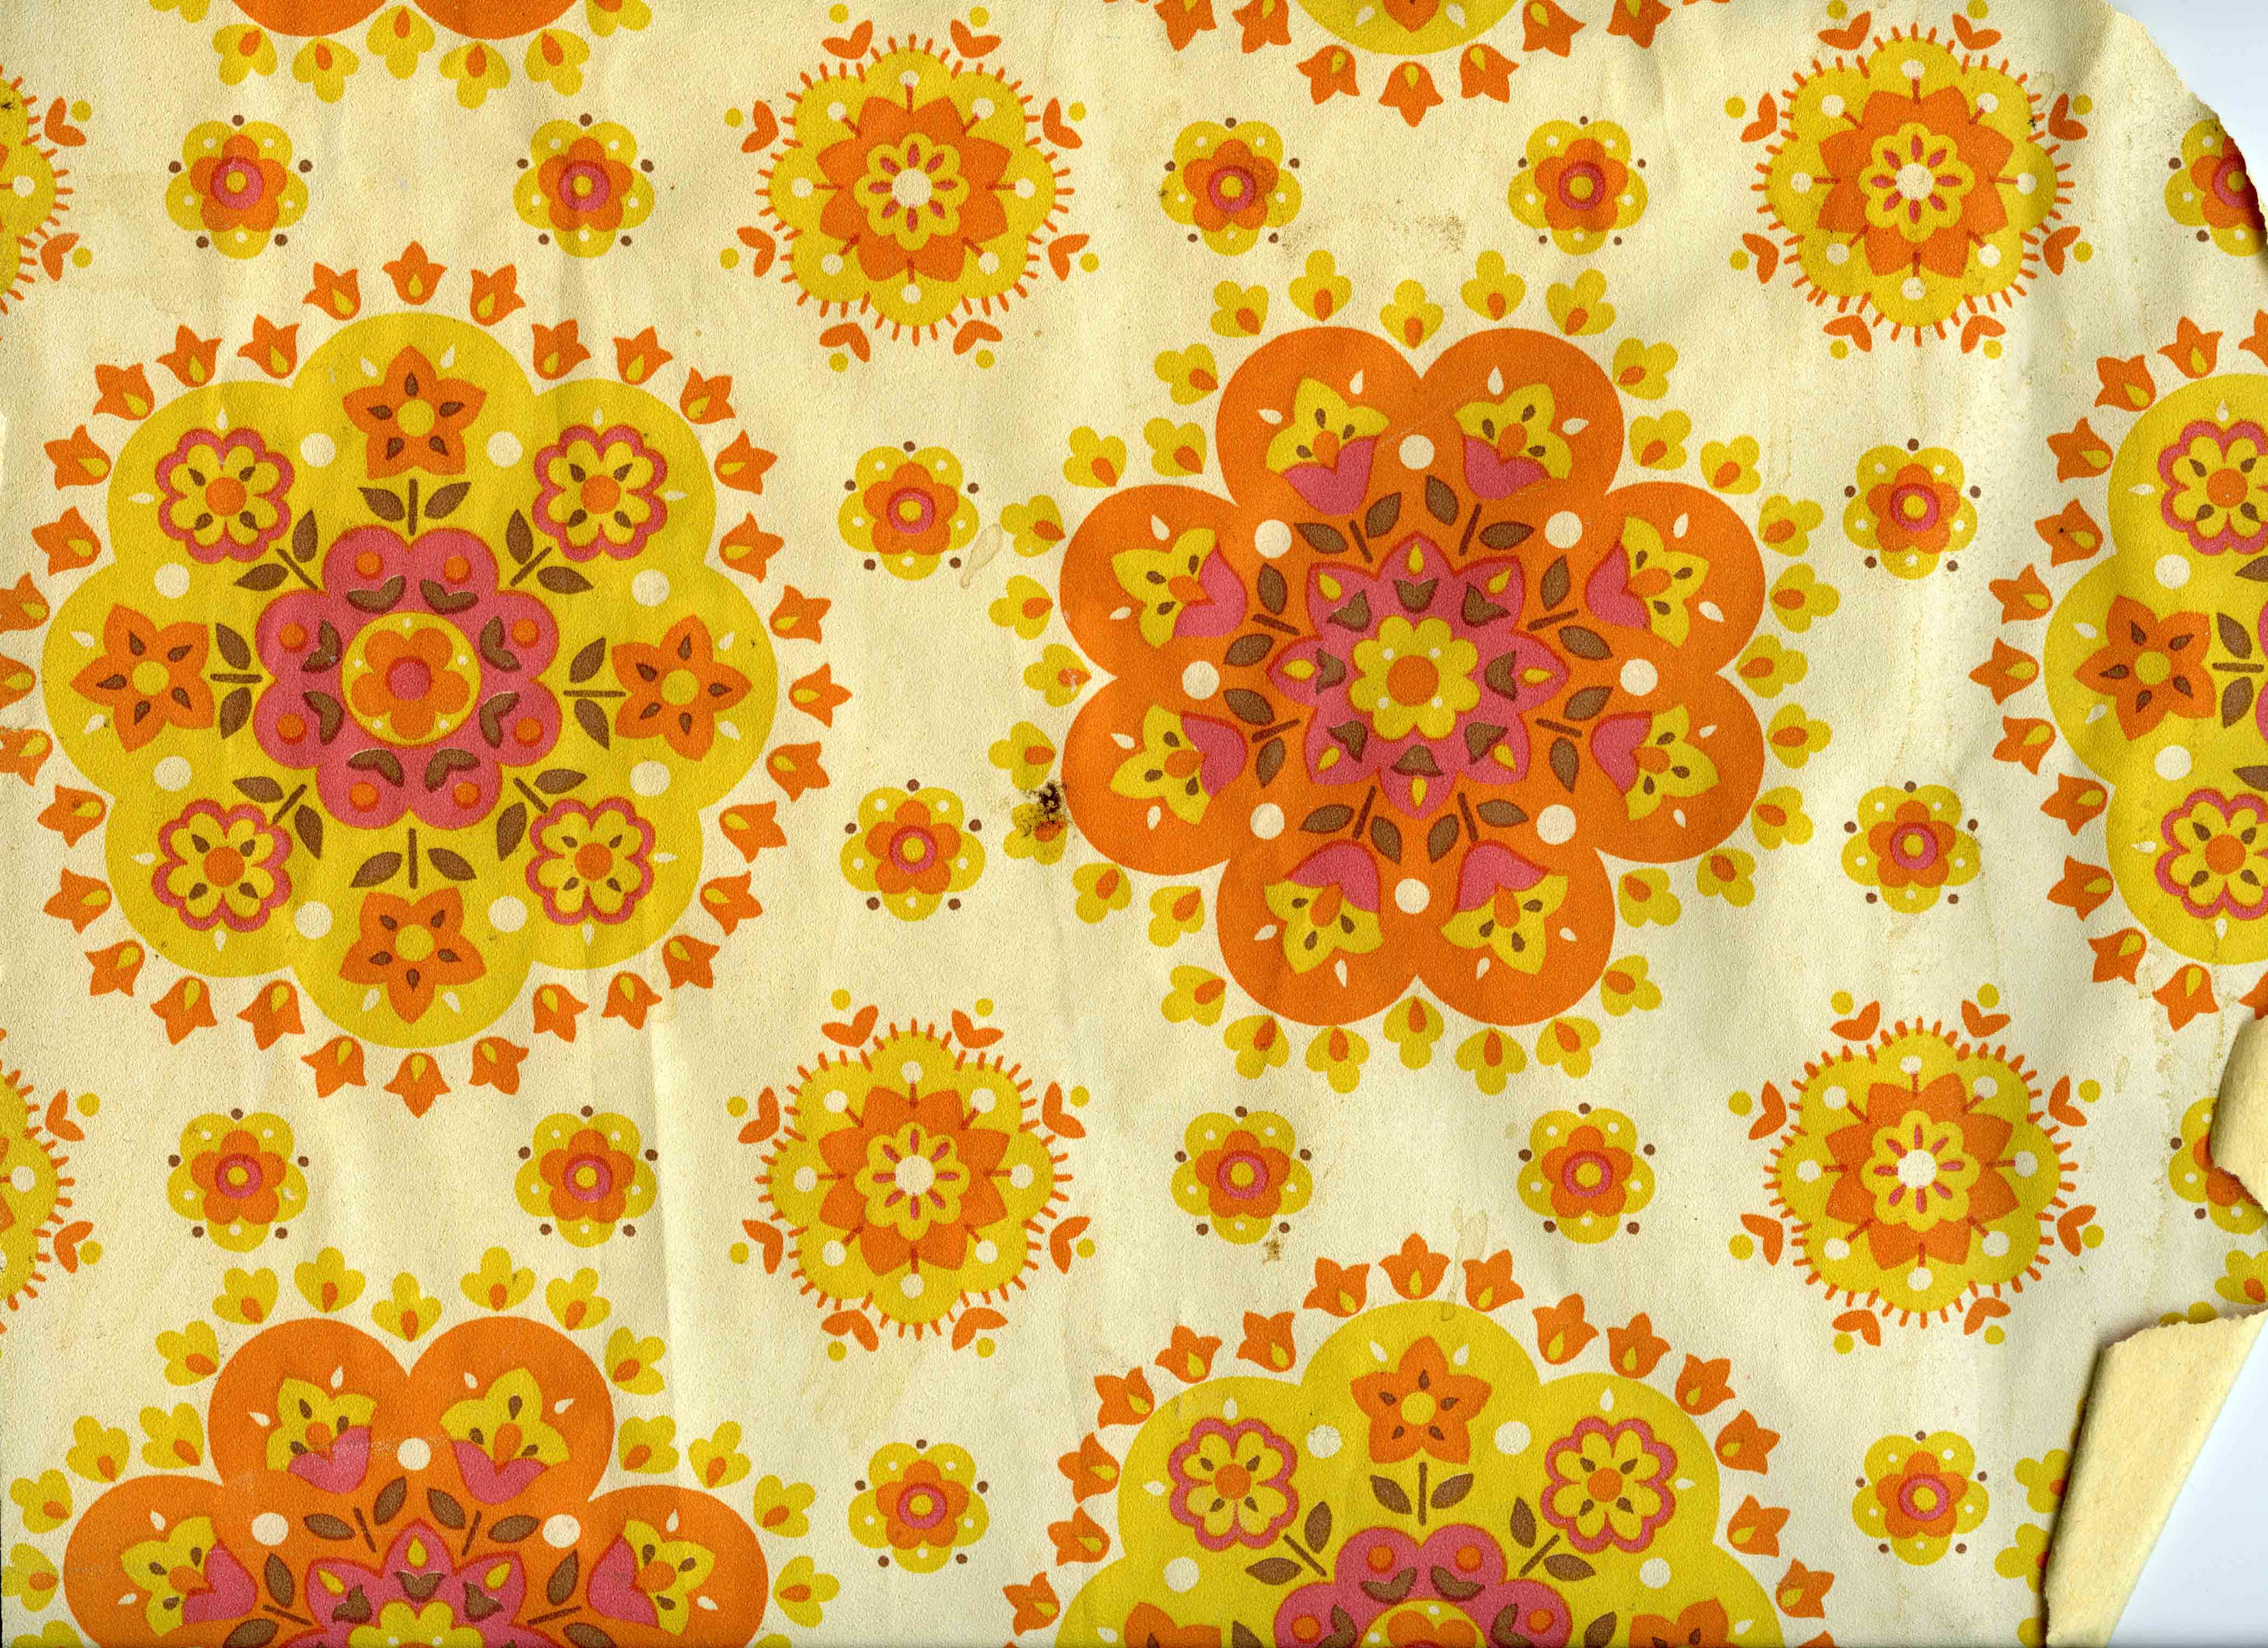 wallpaper 60s 70s yellow orange floral circular pattern design on wall